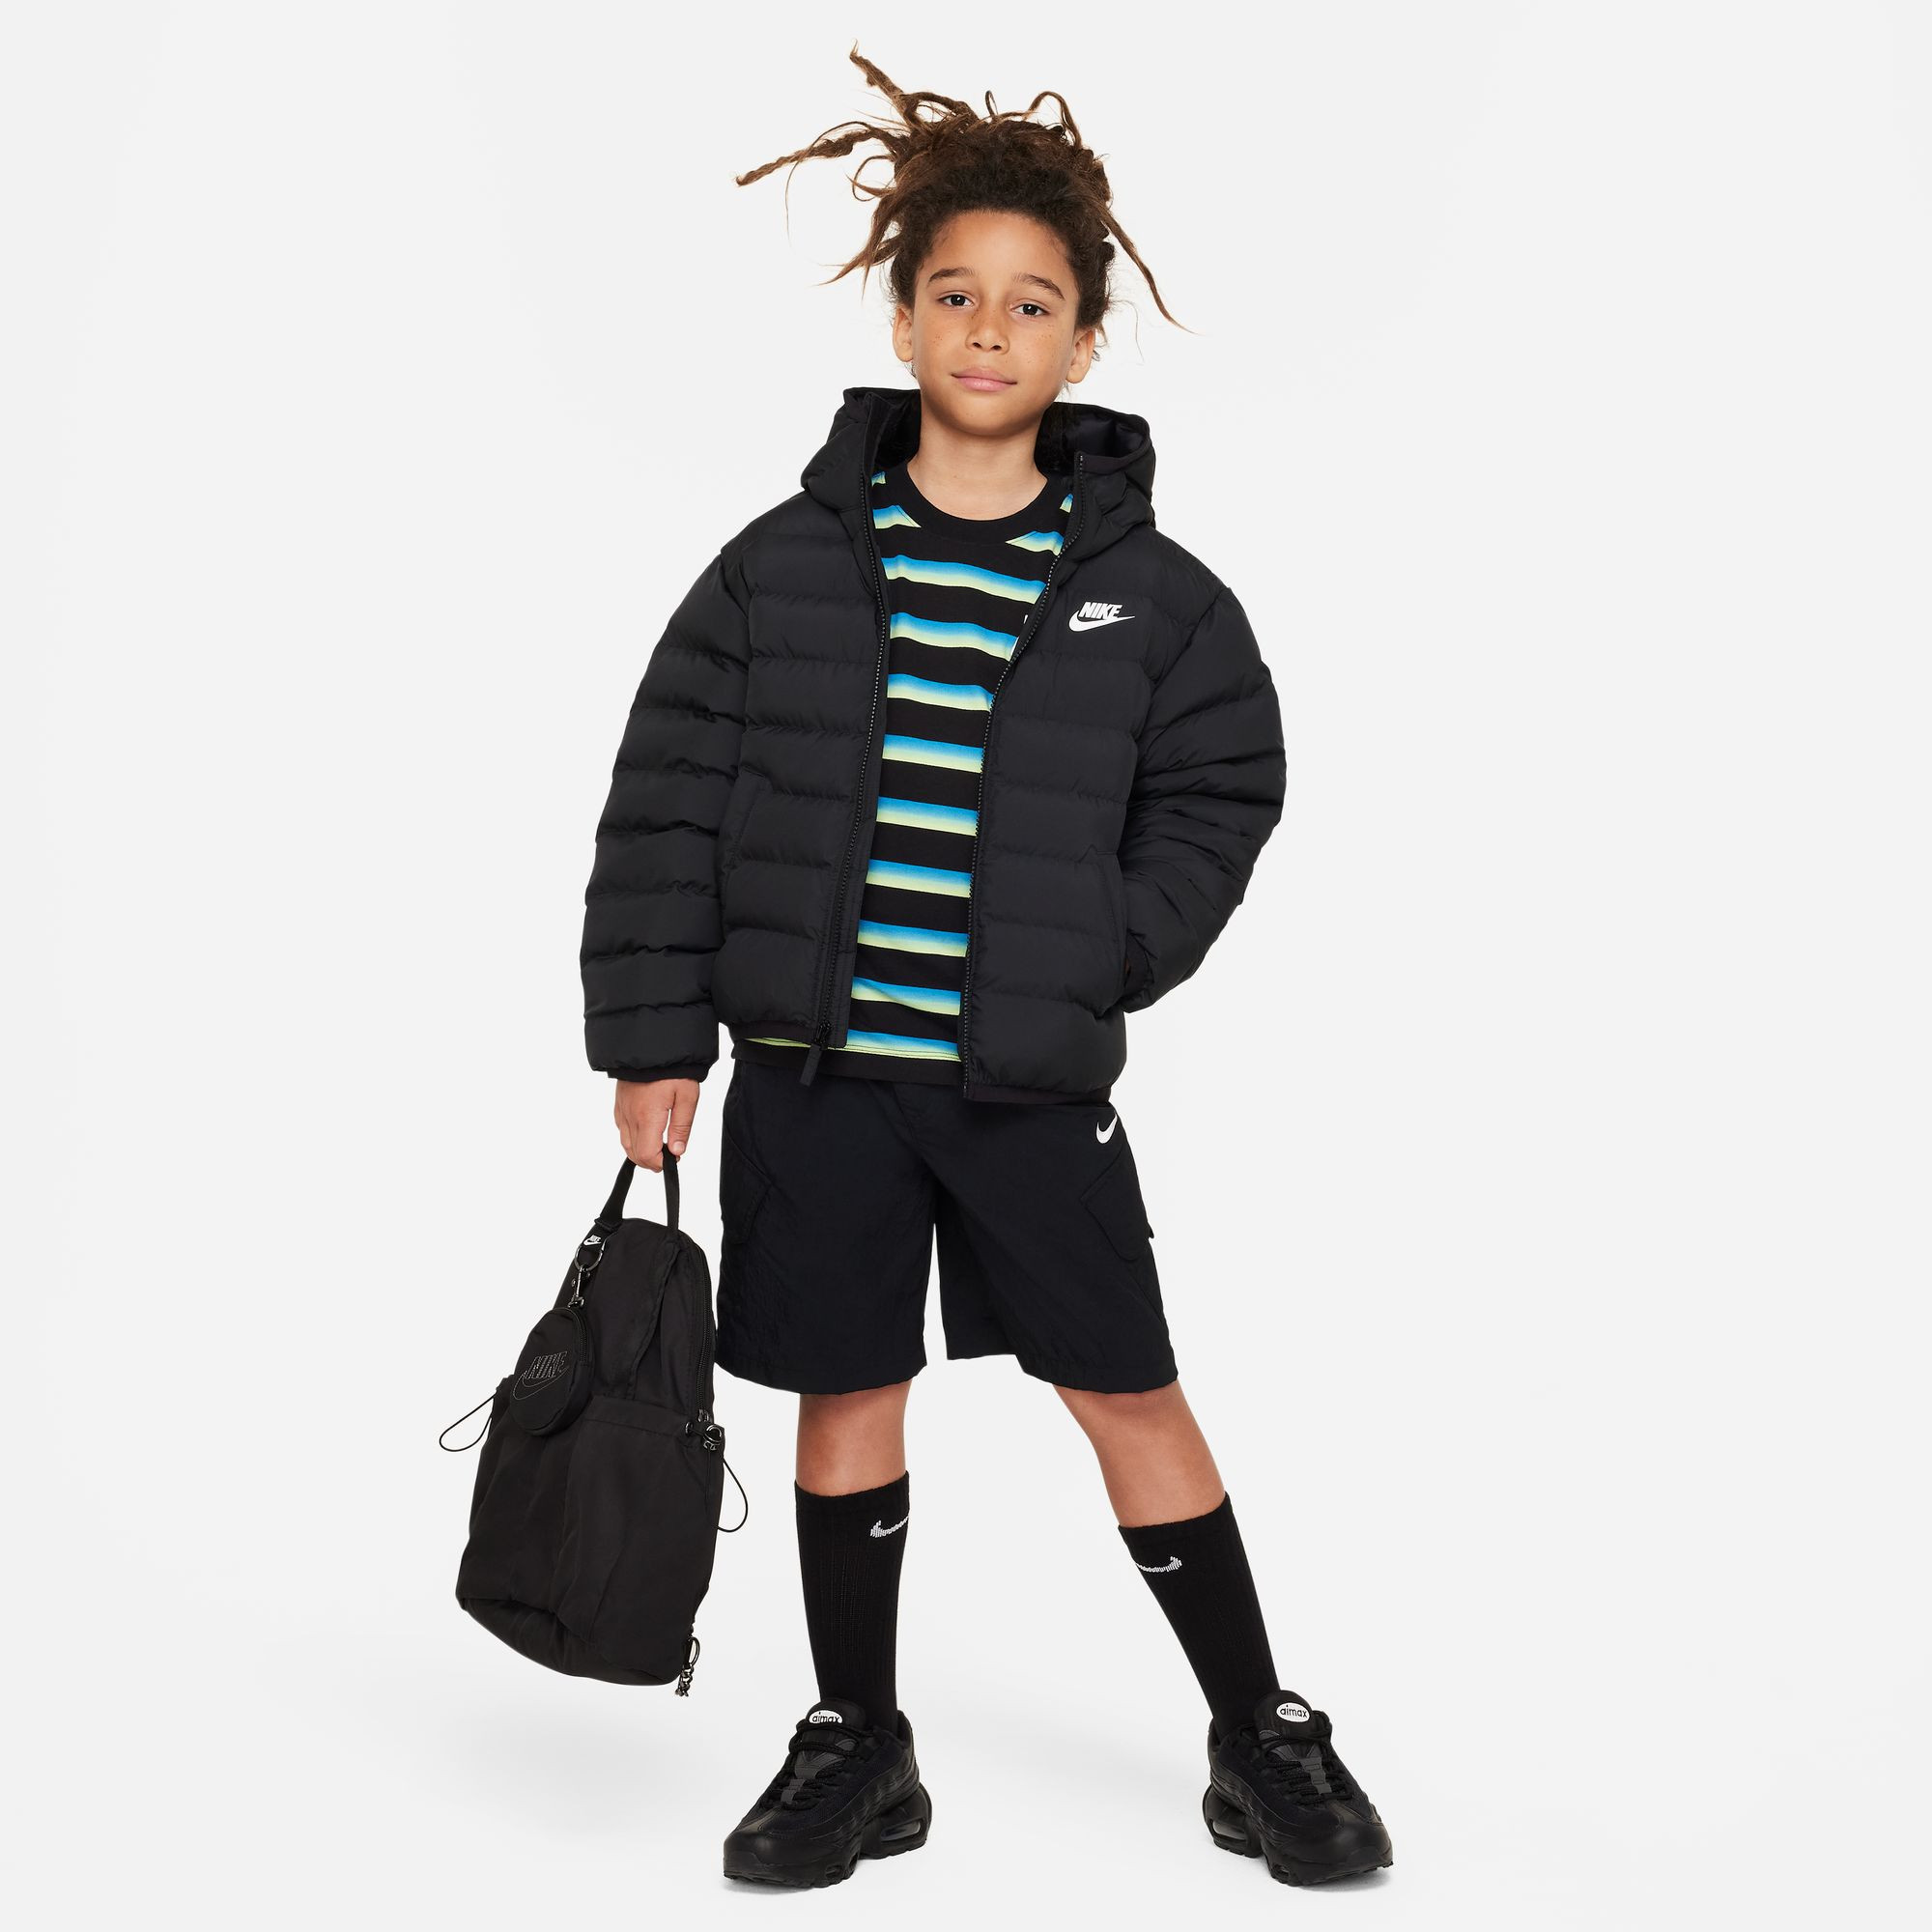 Doudoune à capuche pour enfant Nike Sportswear - Black/Black/White - FD2845-010